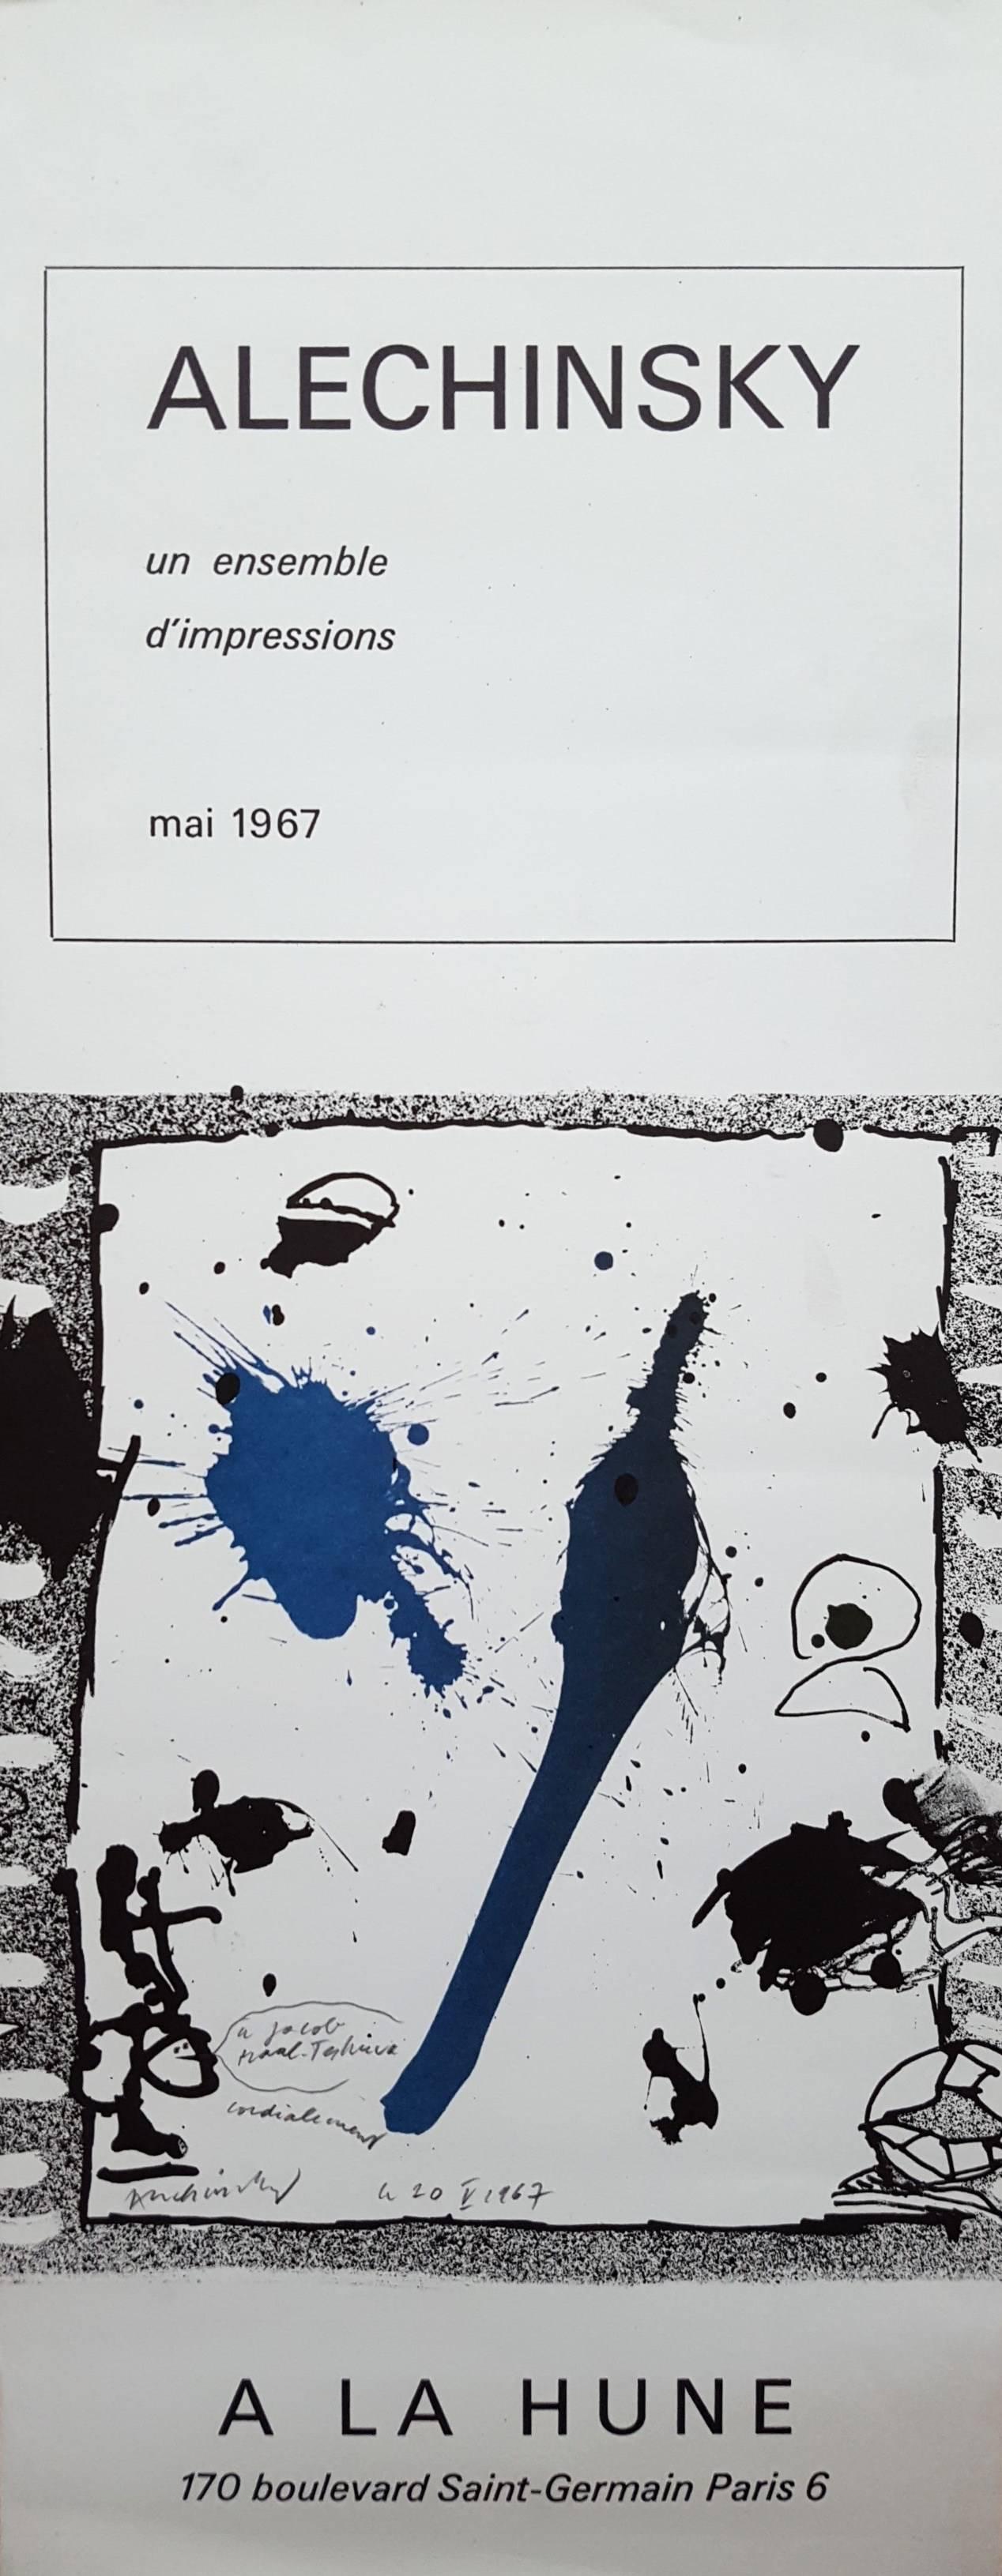 Pierre Alechinsky Abstract Print - Alechinsky: Un Ensemble d'Impressions